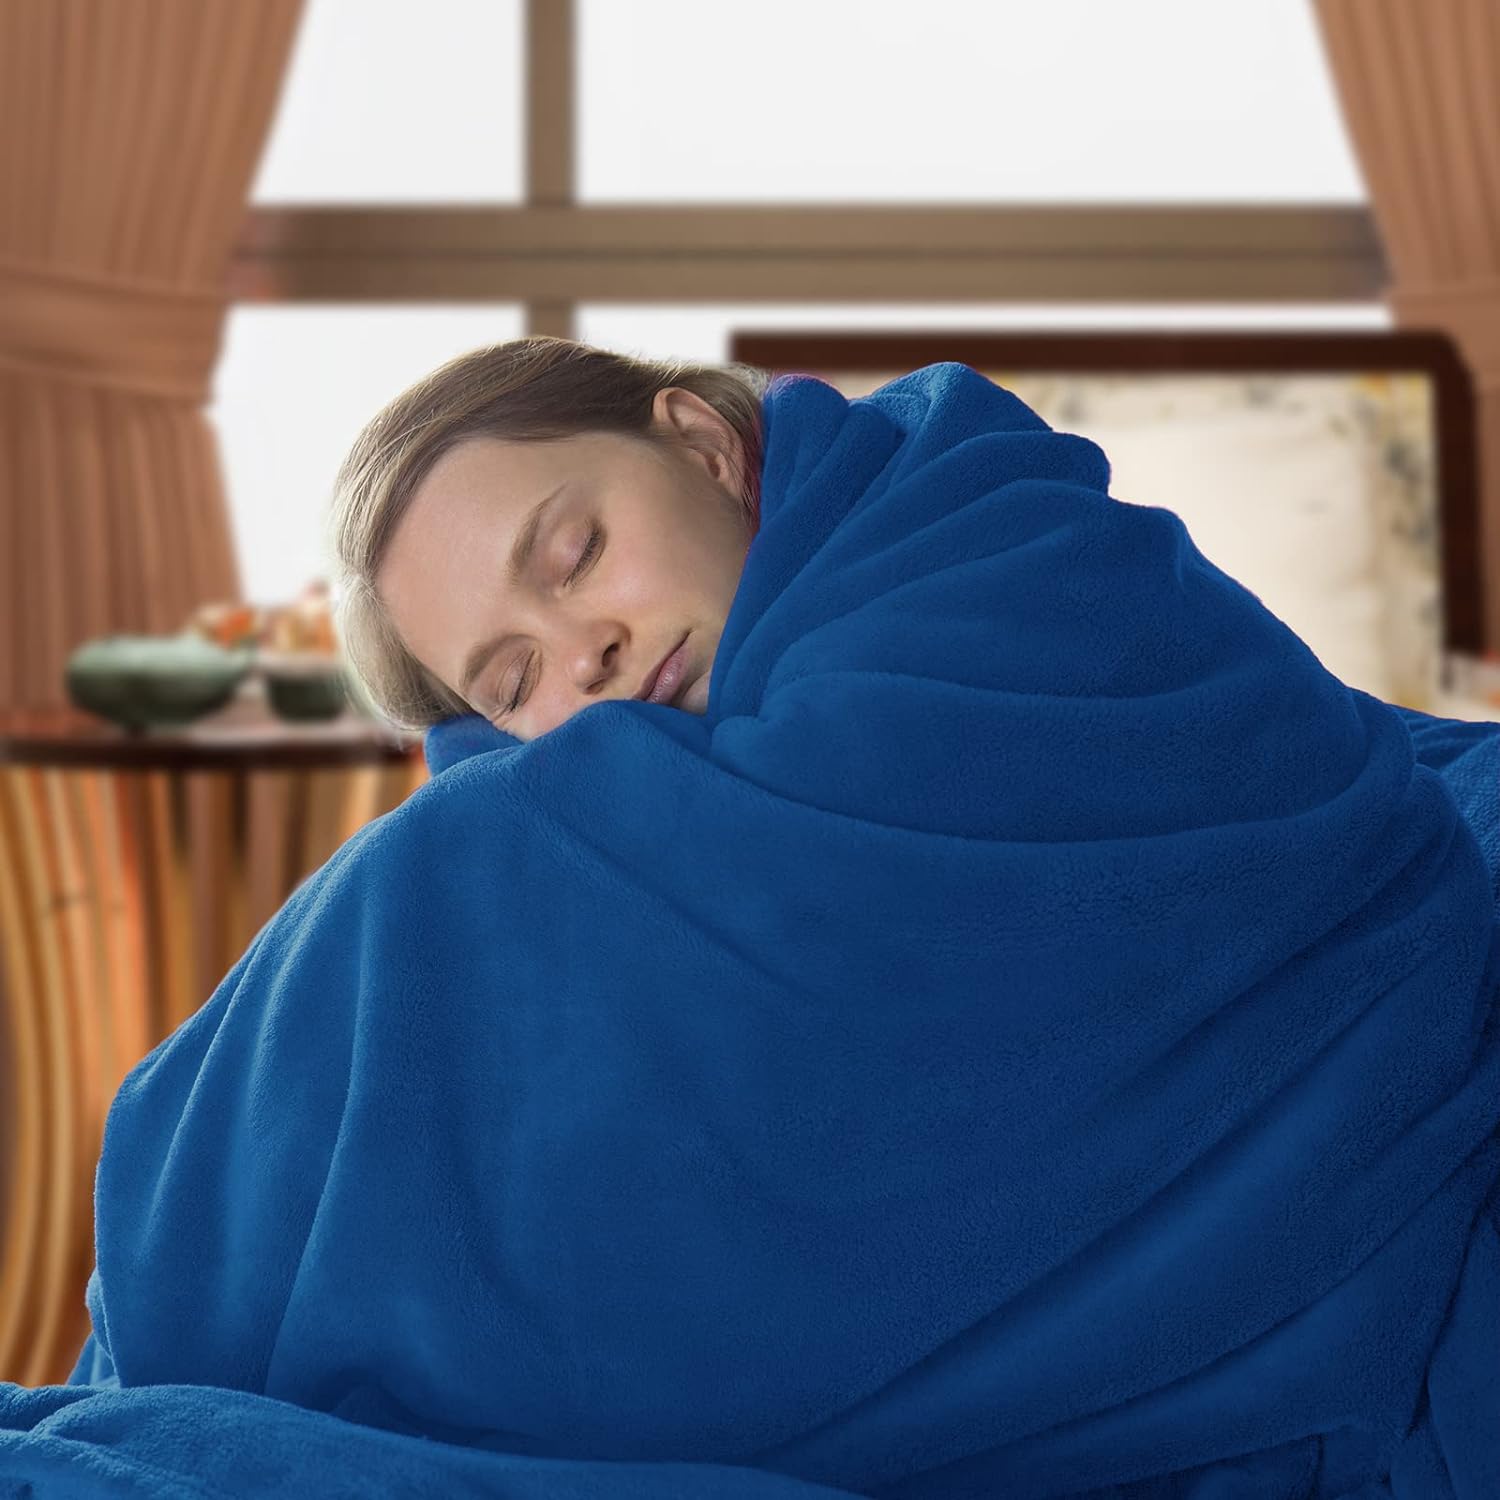  Manta azul para cama, tamaño bebé, playa, súper acogedora,  cálida manta de forro polar, mantas lujosas para sofá cama, 30 x 40  pulgadas : Hogar y Cocina